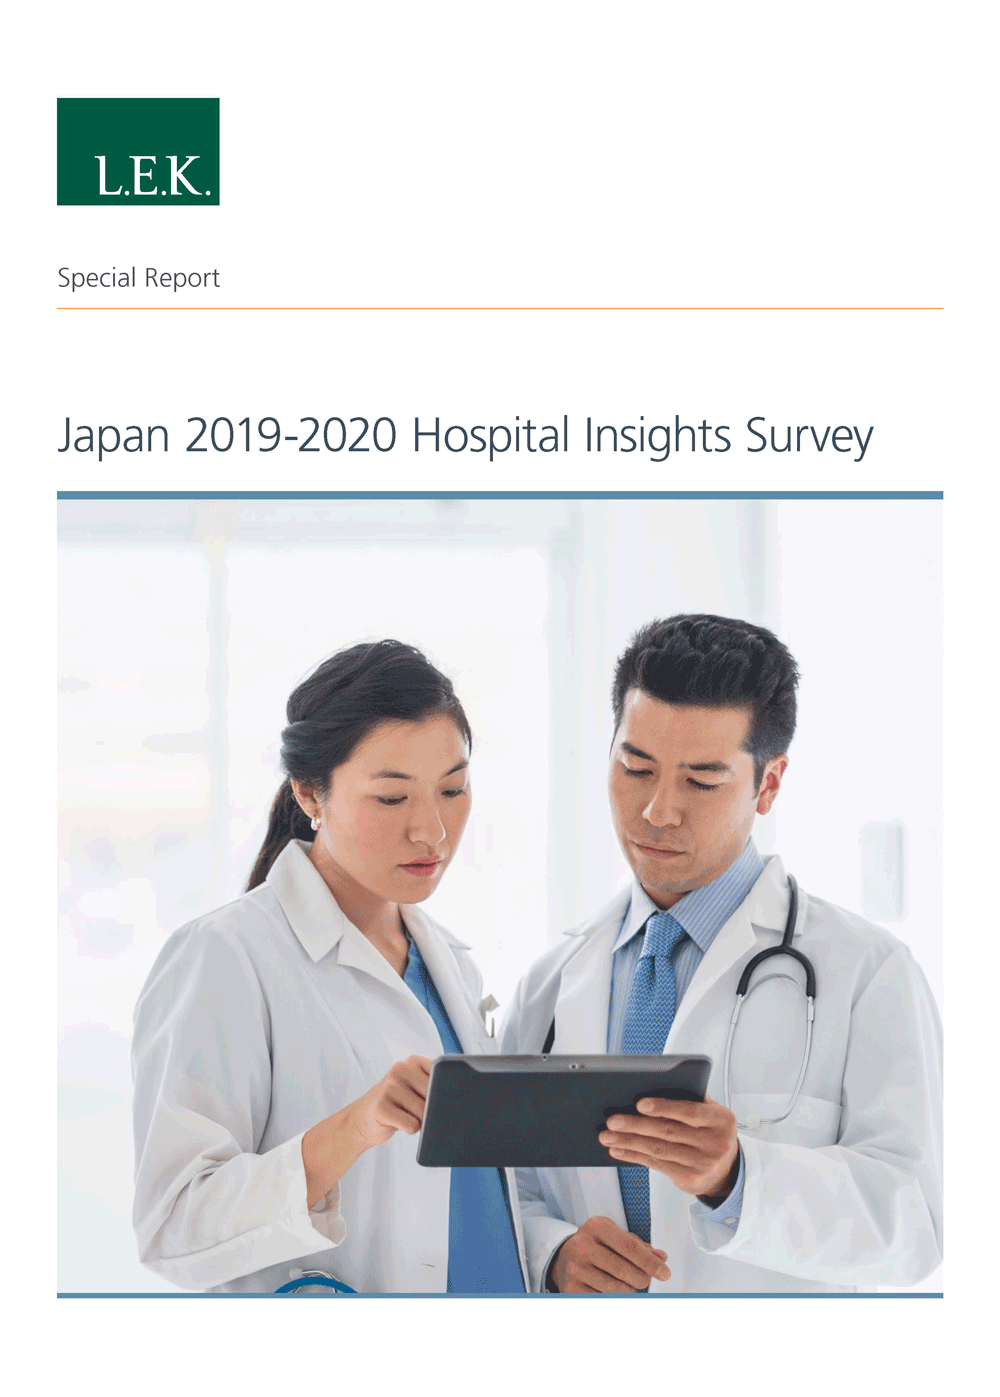 Japan Hospital survey report